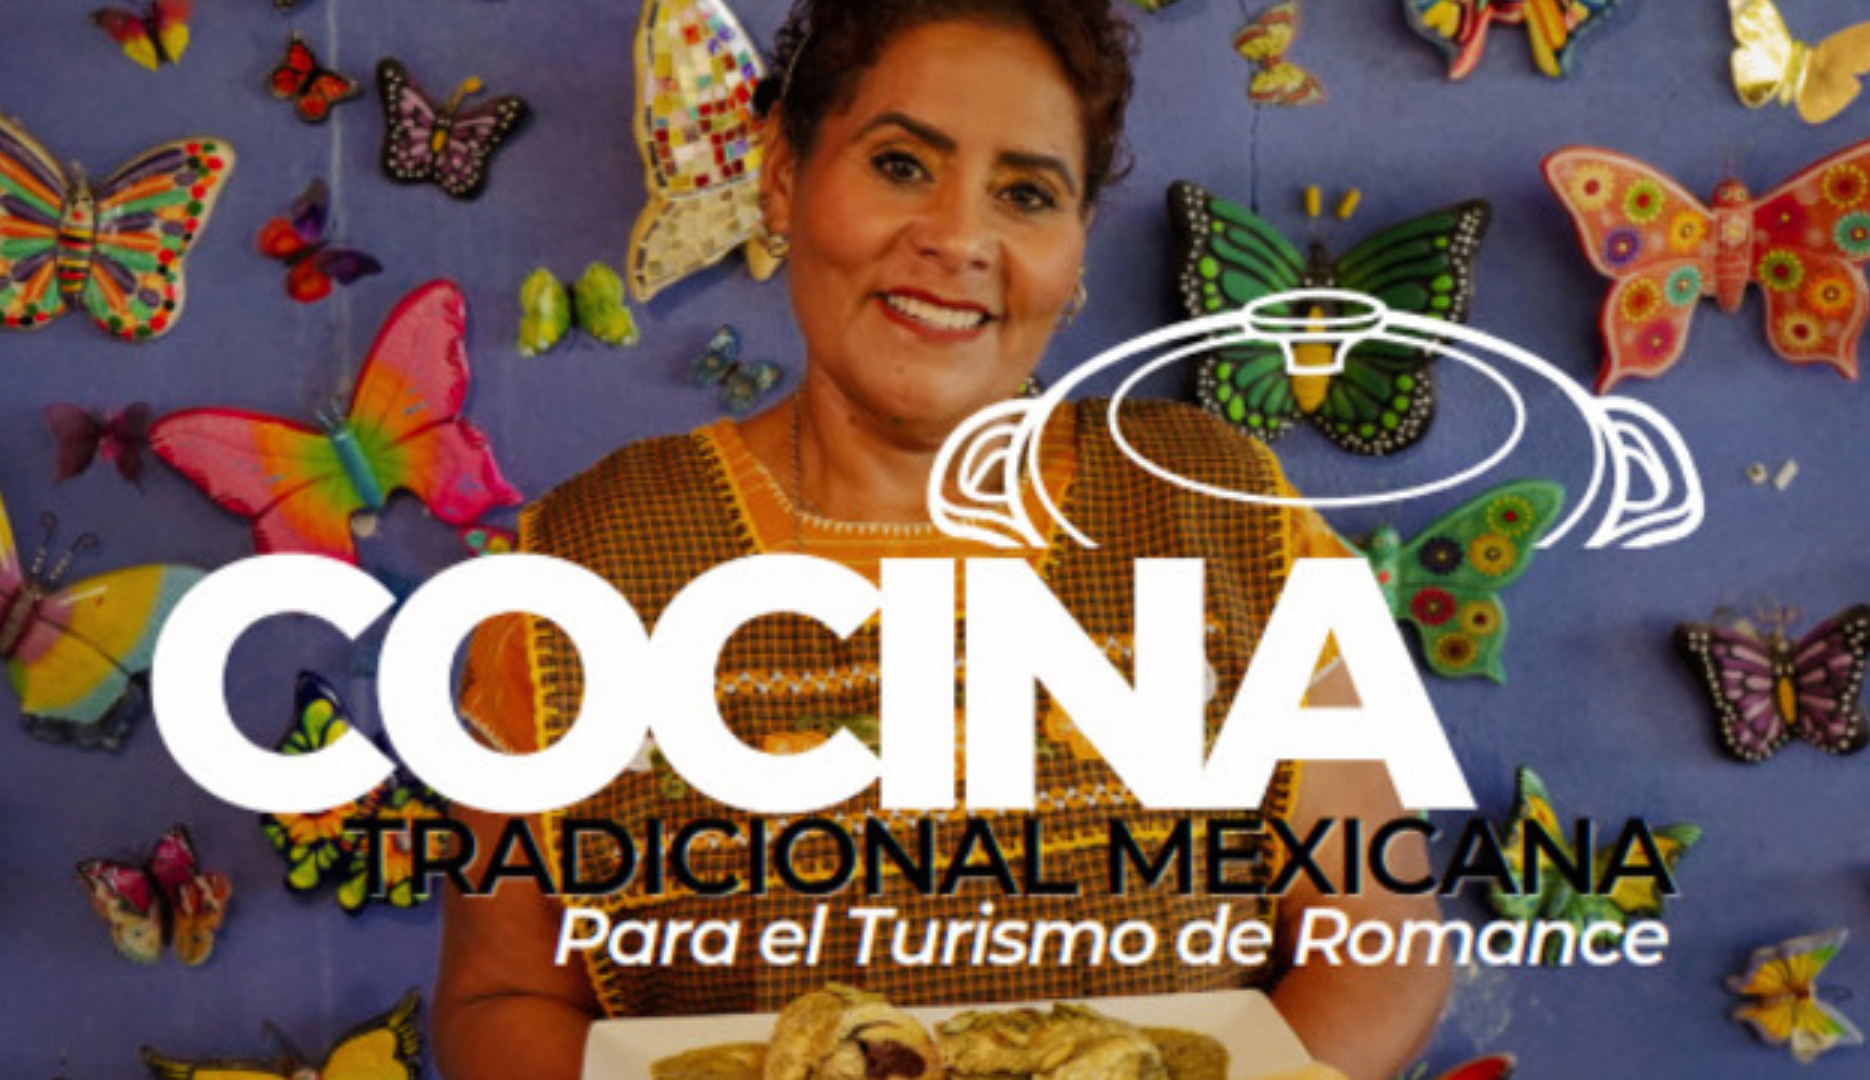 Sectur presenta el Catálogo de Cocina Tradicional Mexicana